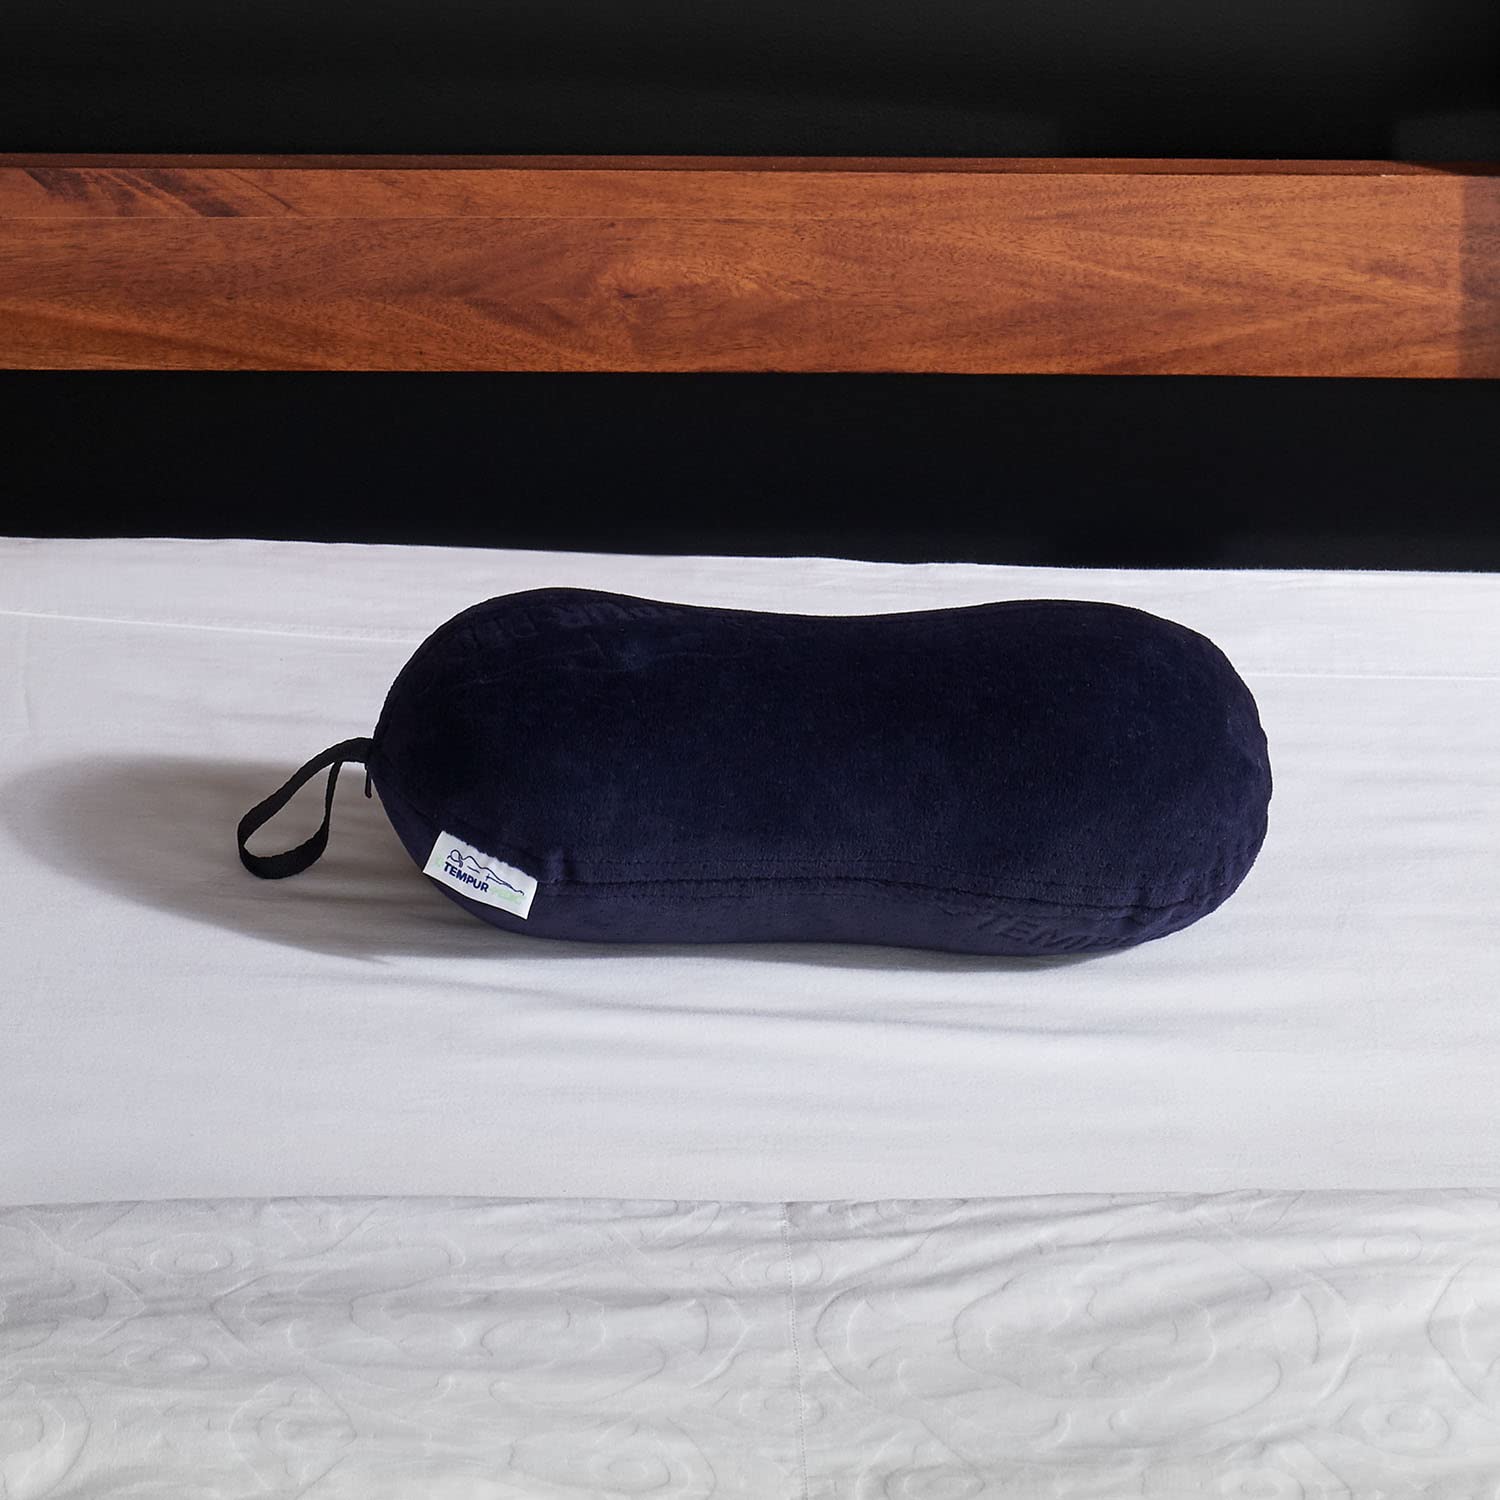 Tempur-Pedic All-Purpose Memory Foam Travel Pillow, Peanut-Shaped Lumbar Pillow for Neck and Back Pressure Relief, Navy